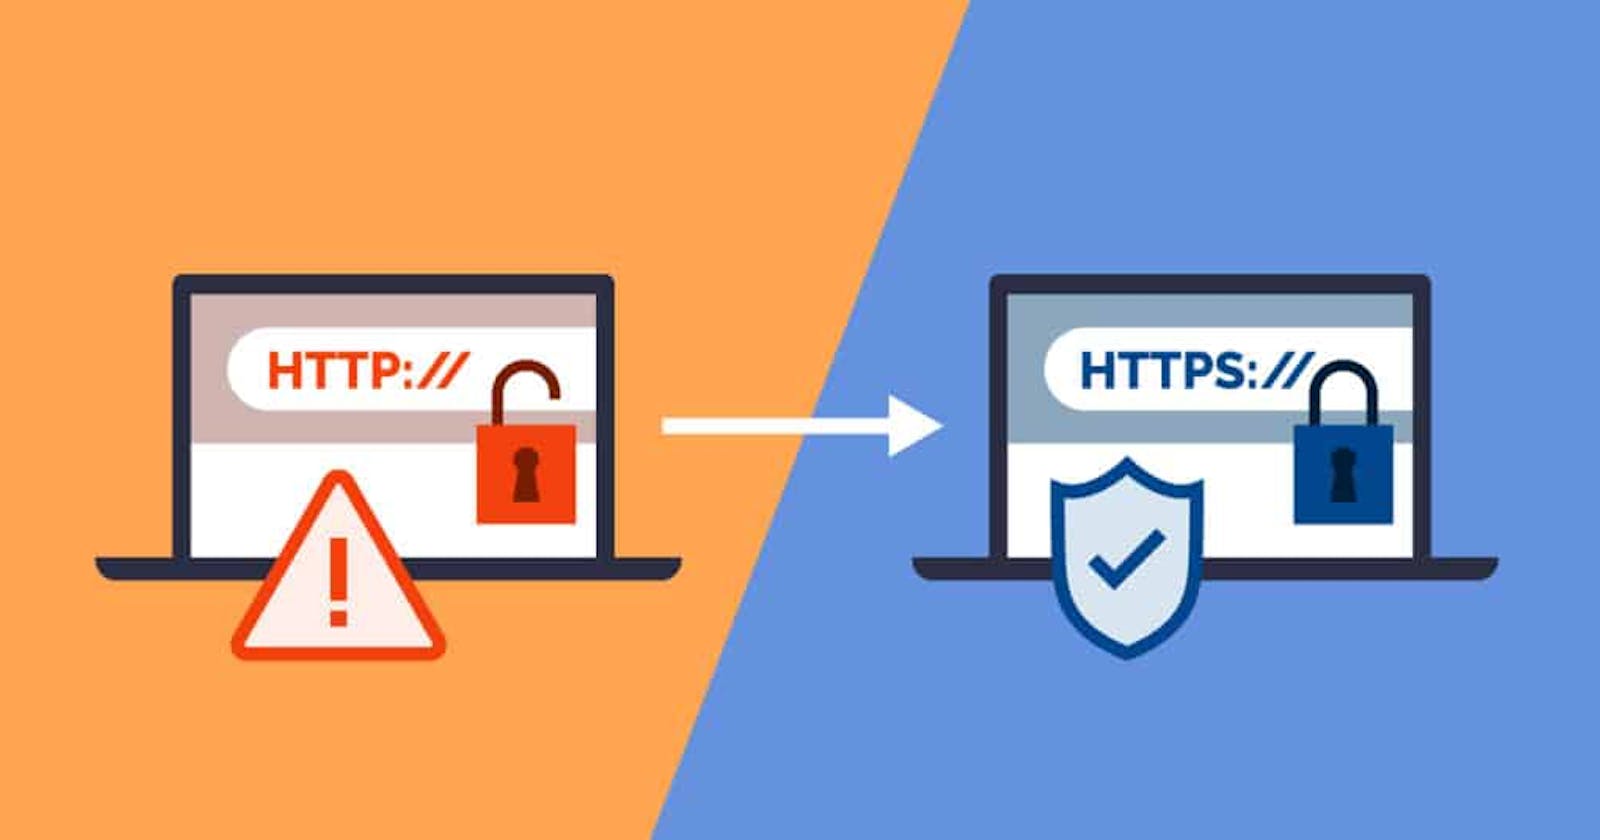 Enabling HTTPS on your website